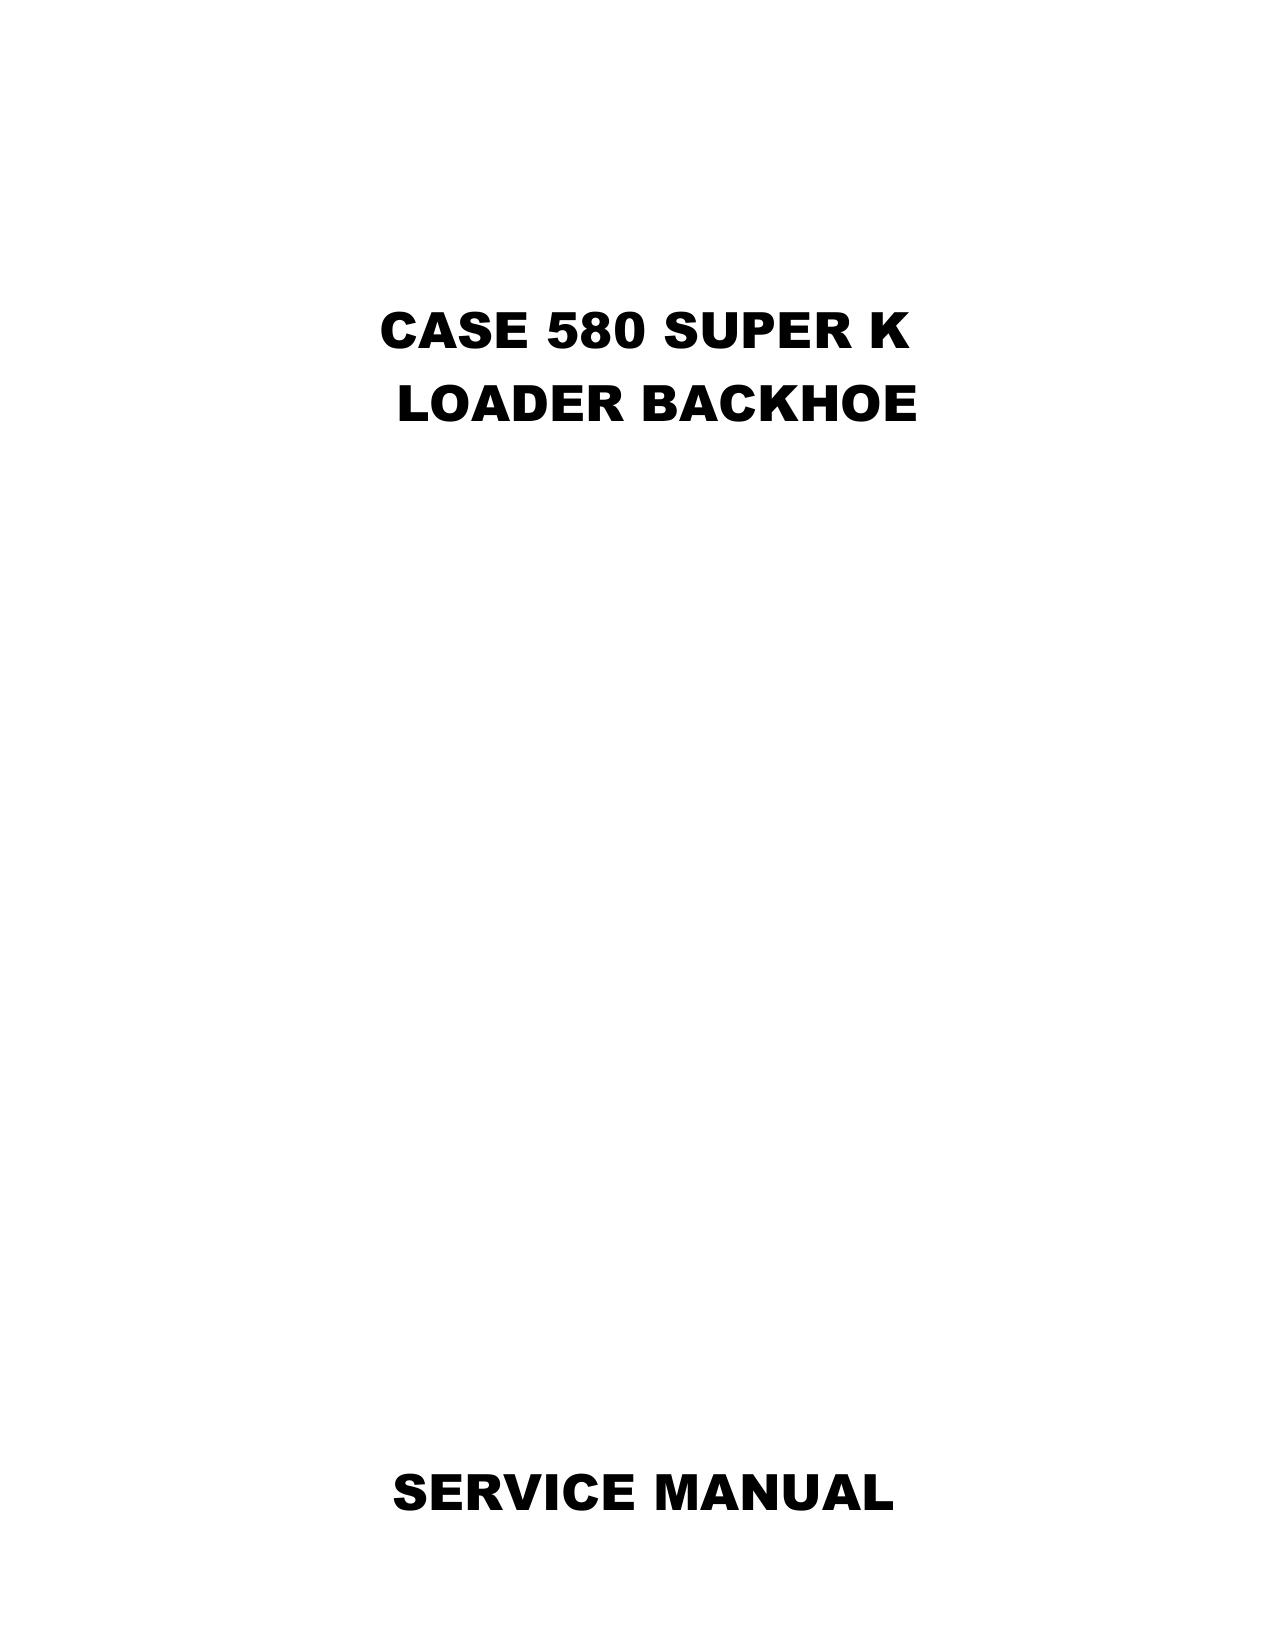 Case 580 Super K Loader Backhoe repair manual Preview image 6